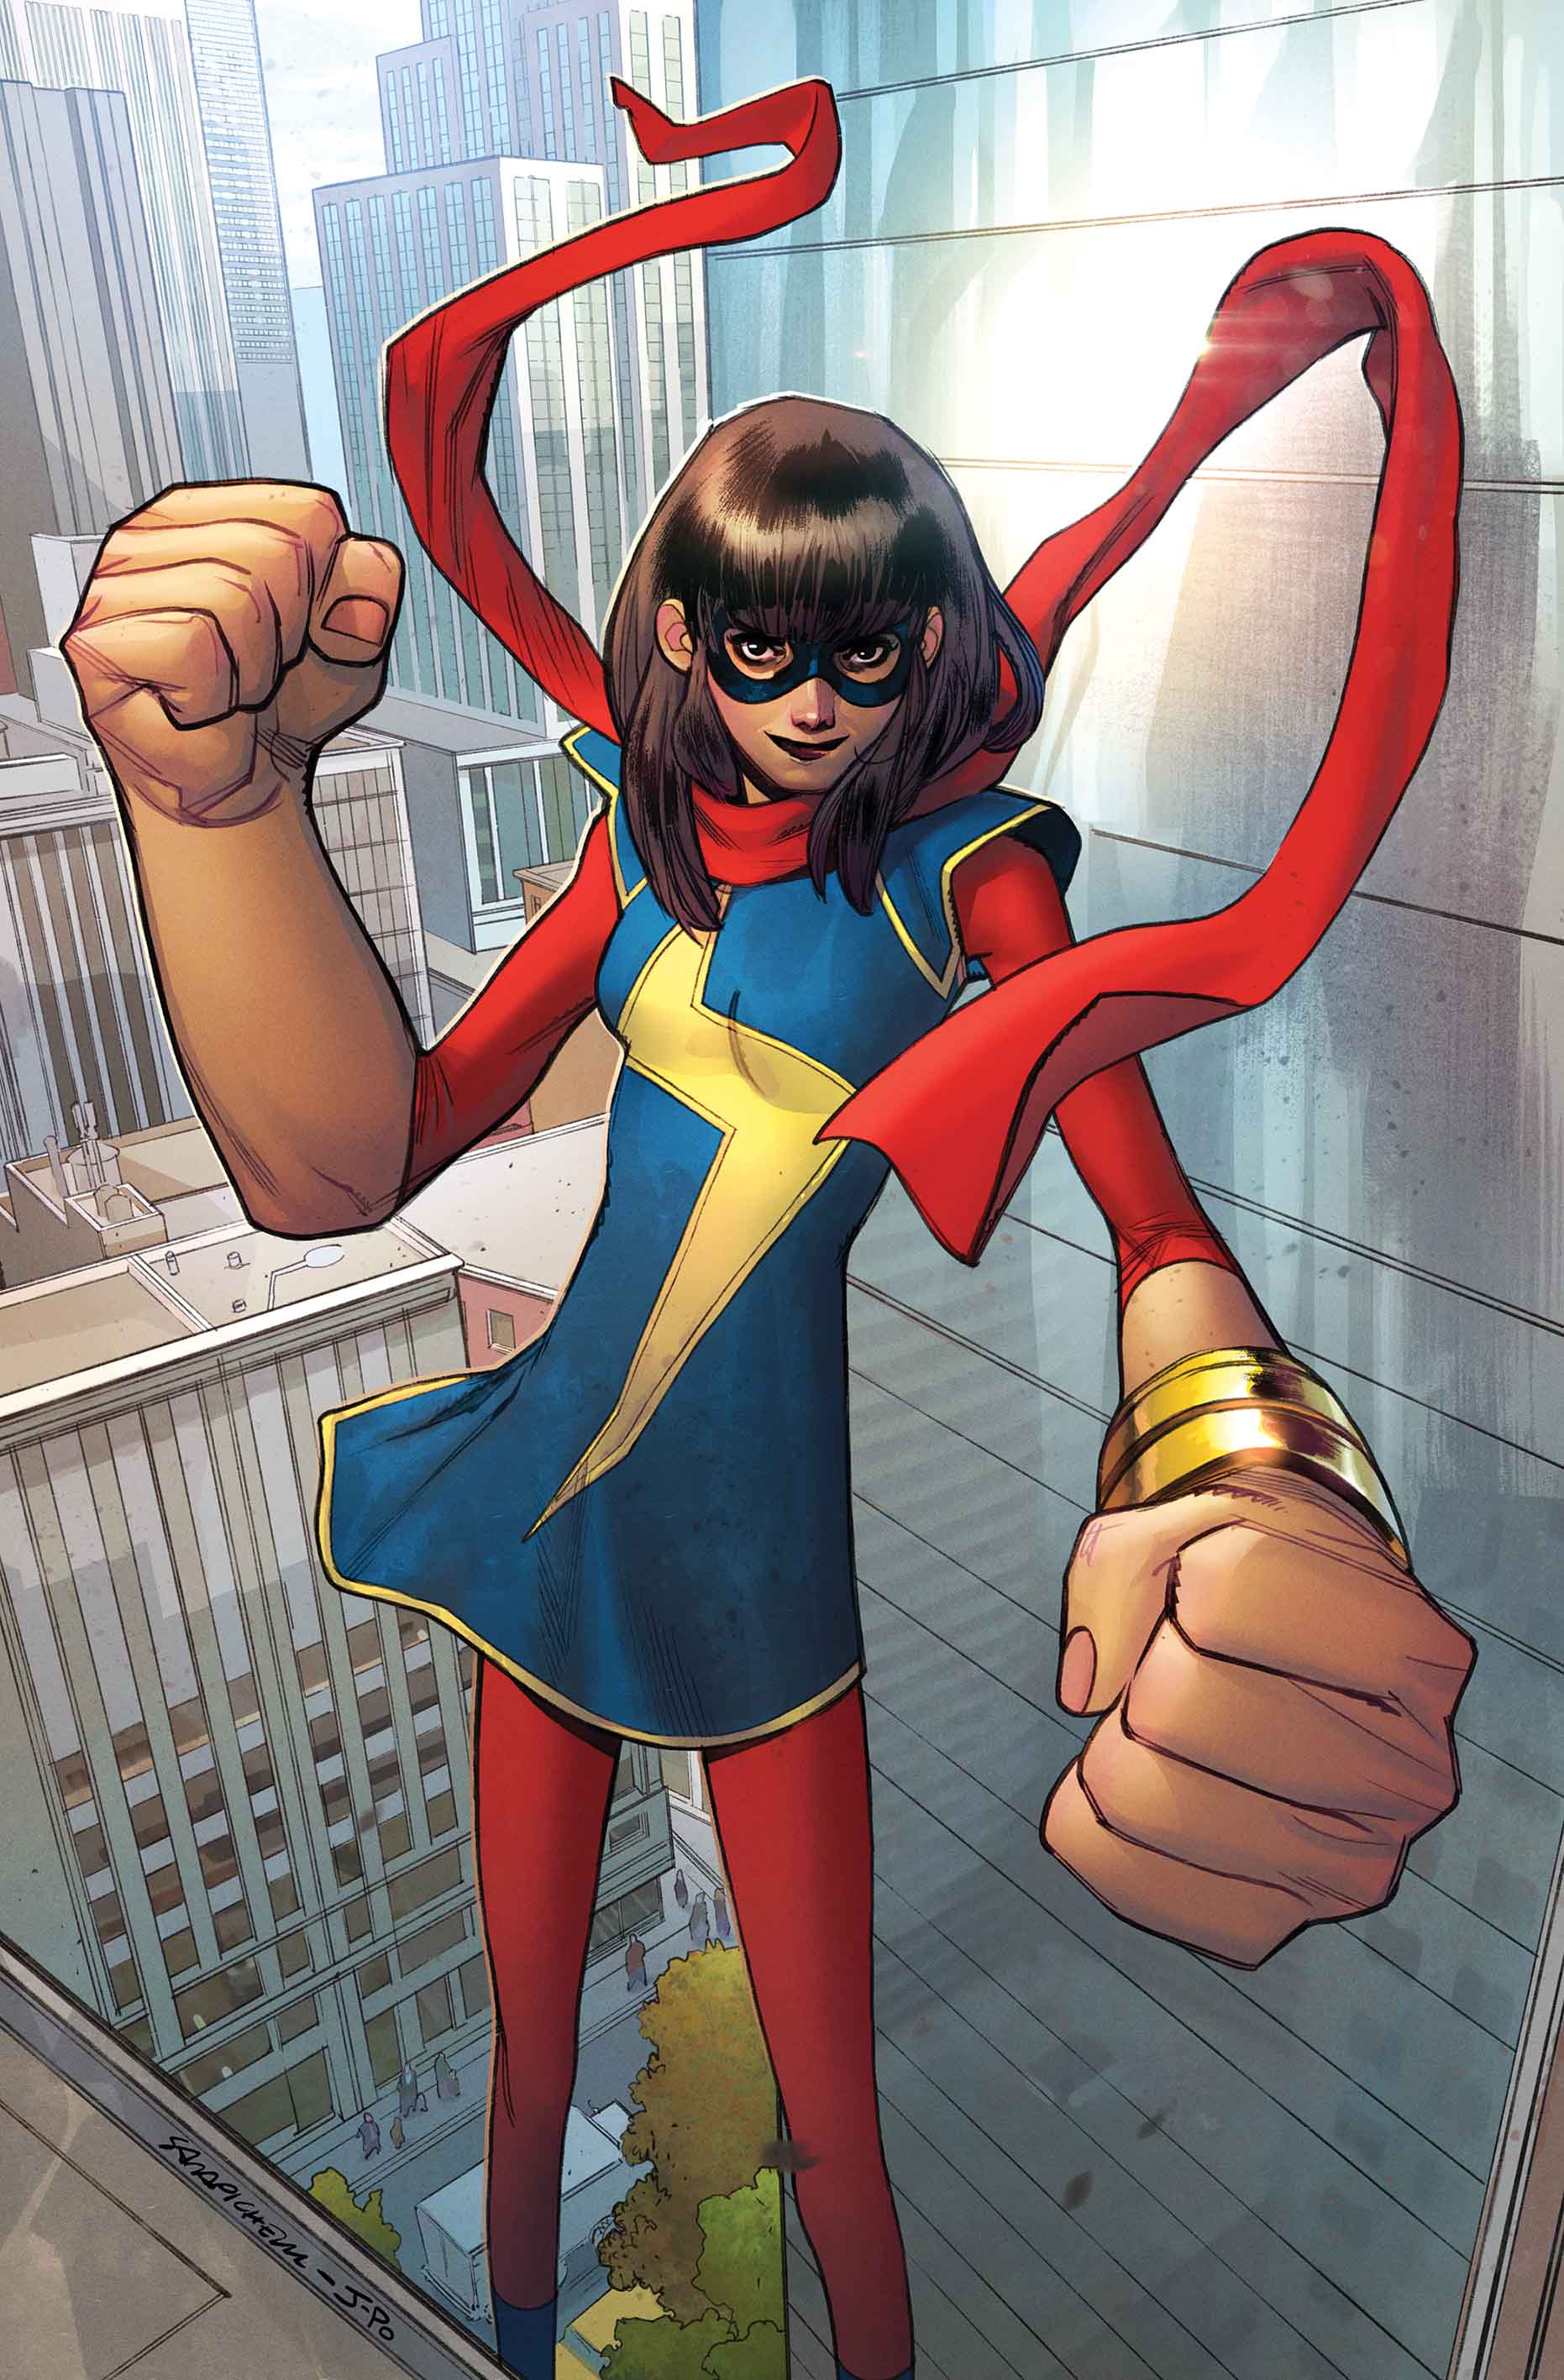 Ms Marvel #38